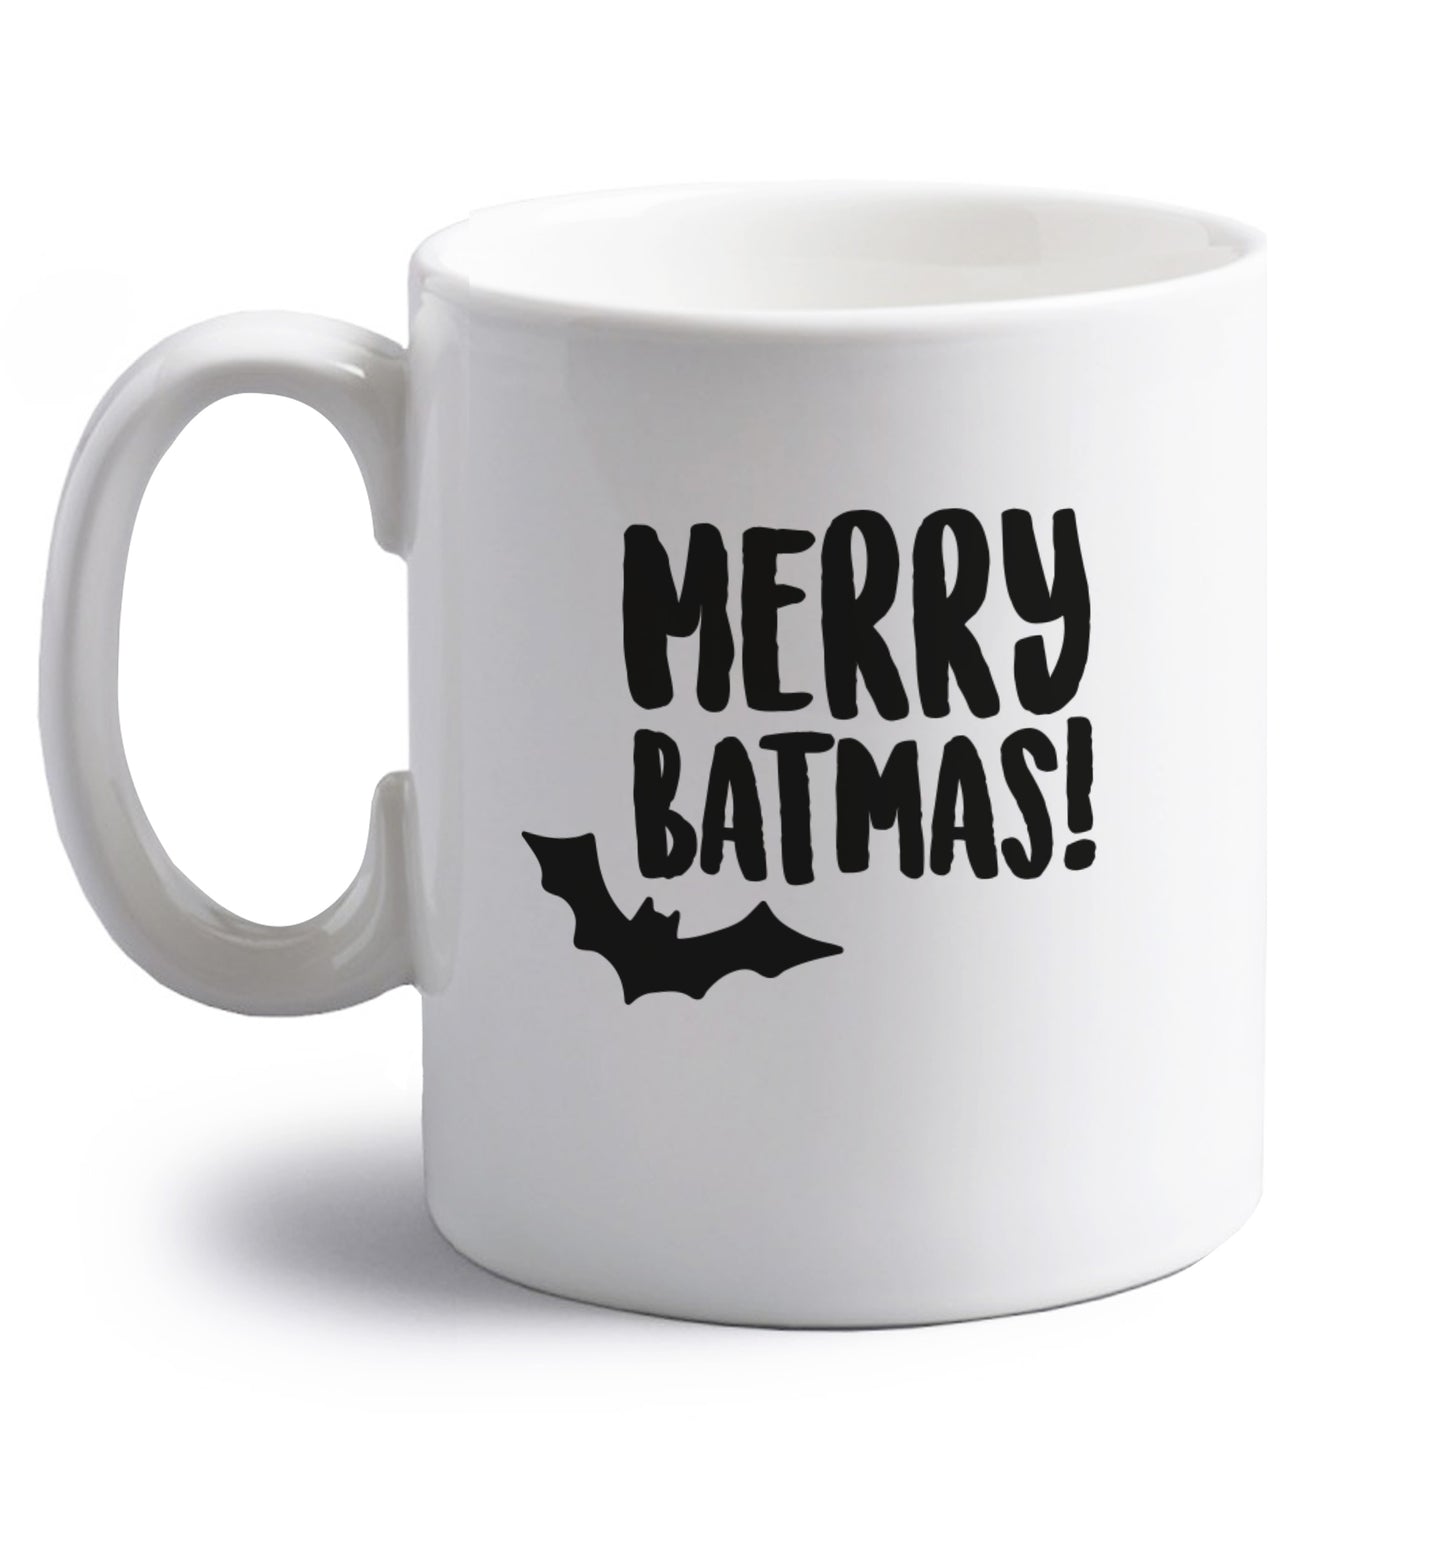 Merry Batmas right handed white ceramic mug 